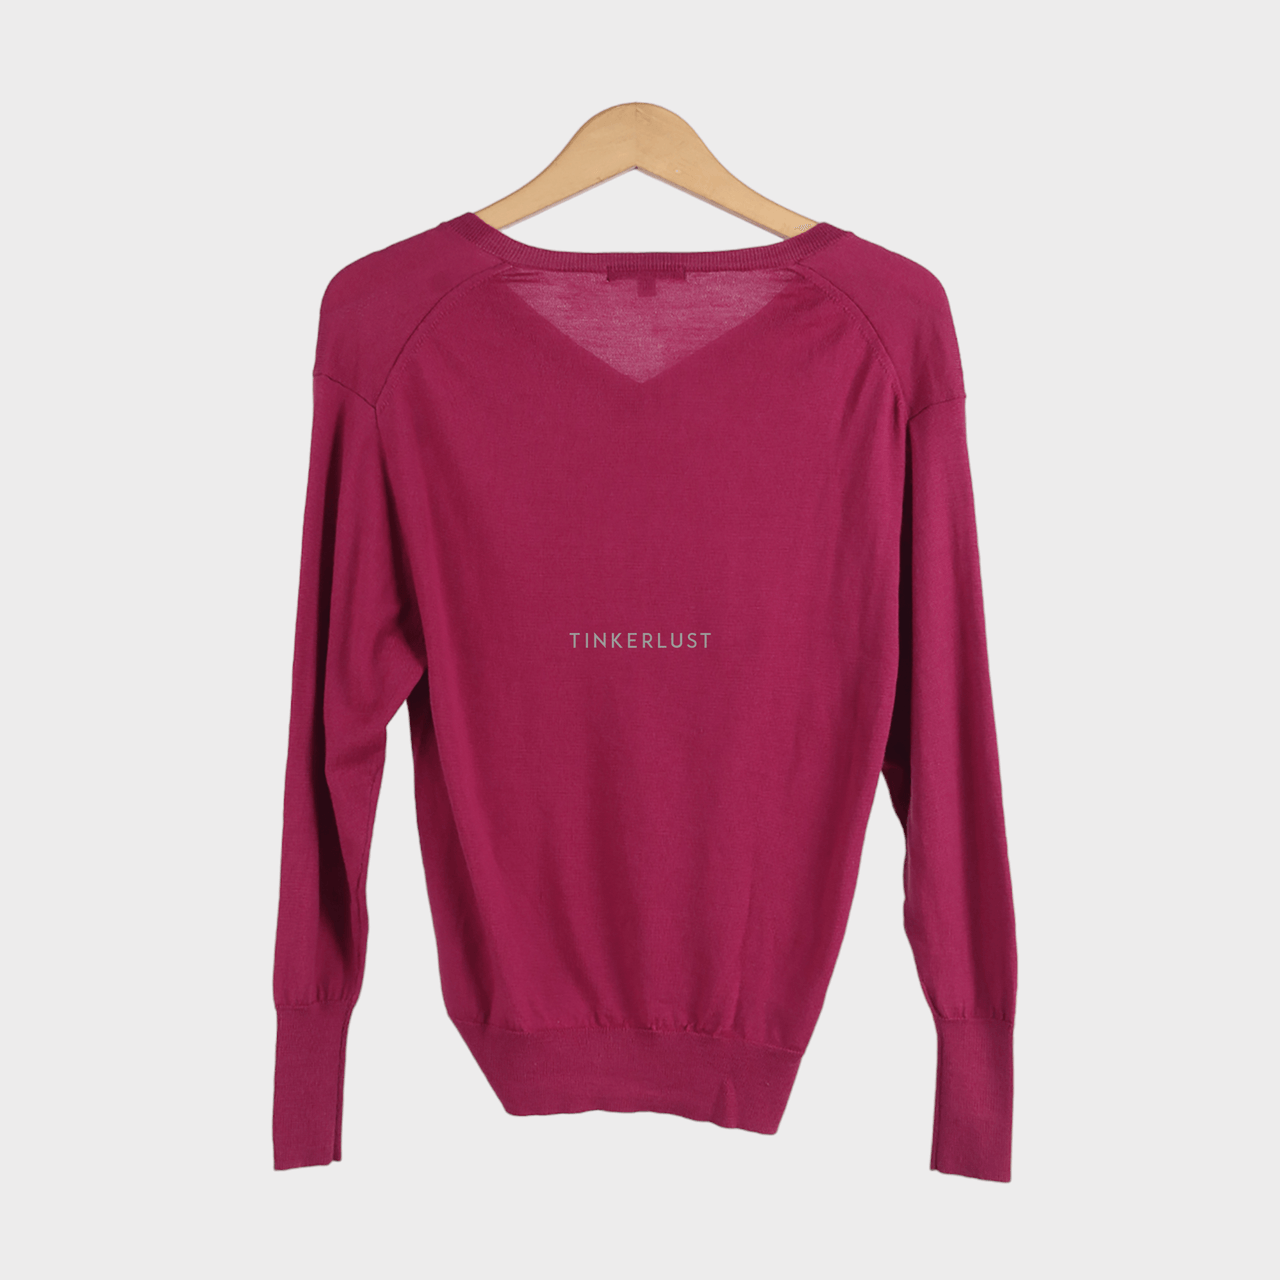 UNIQLO Dark Pink Sweater